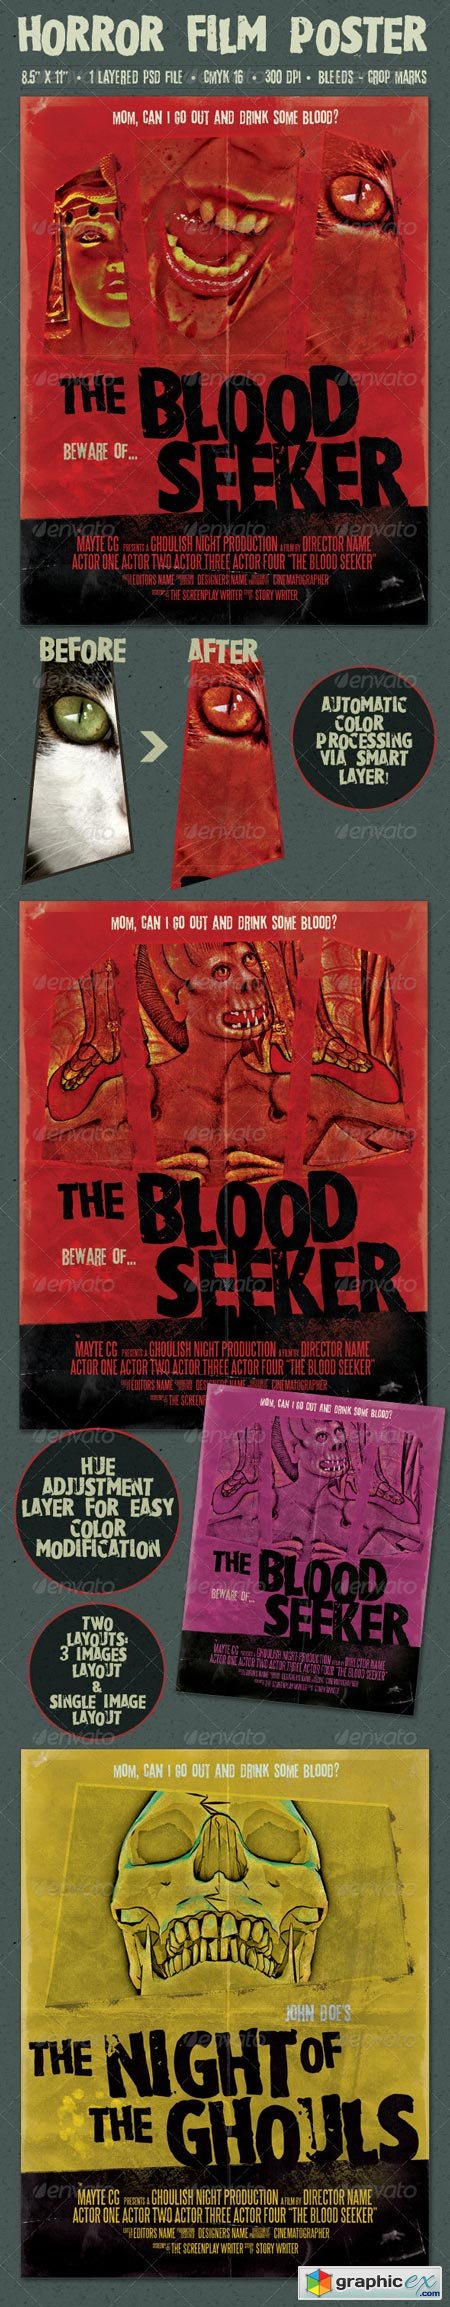 The Blood Seeker Vintage Style Horror Film Poster 6927269